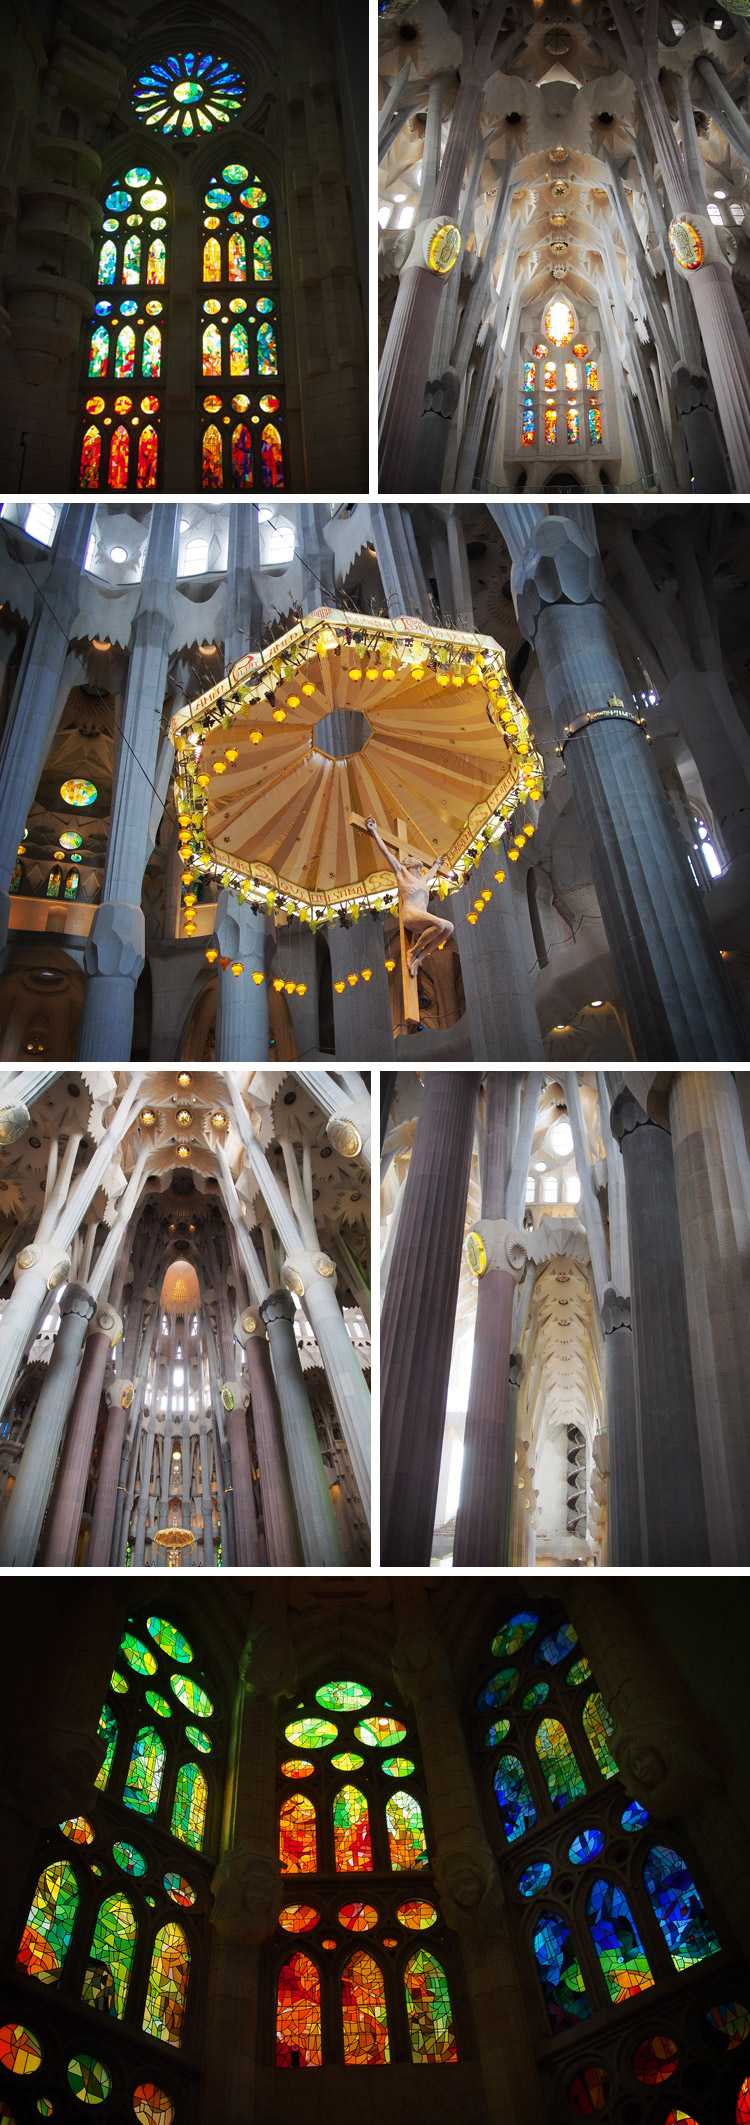 Sagrada Familia Gaudi Barcelone